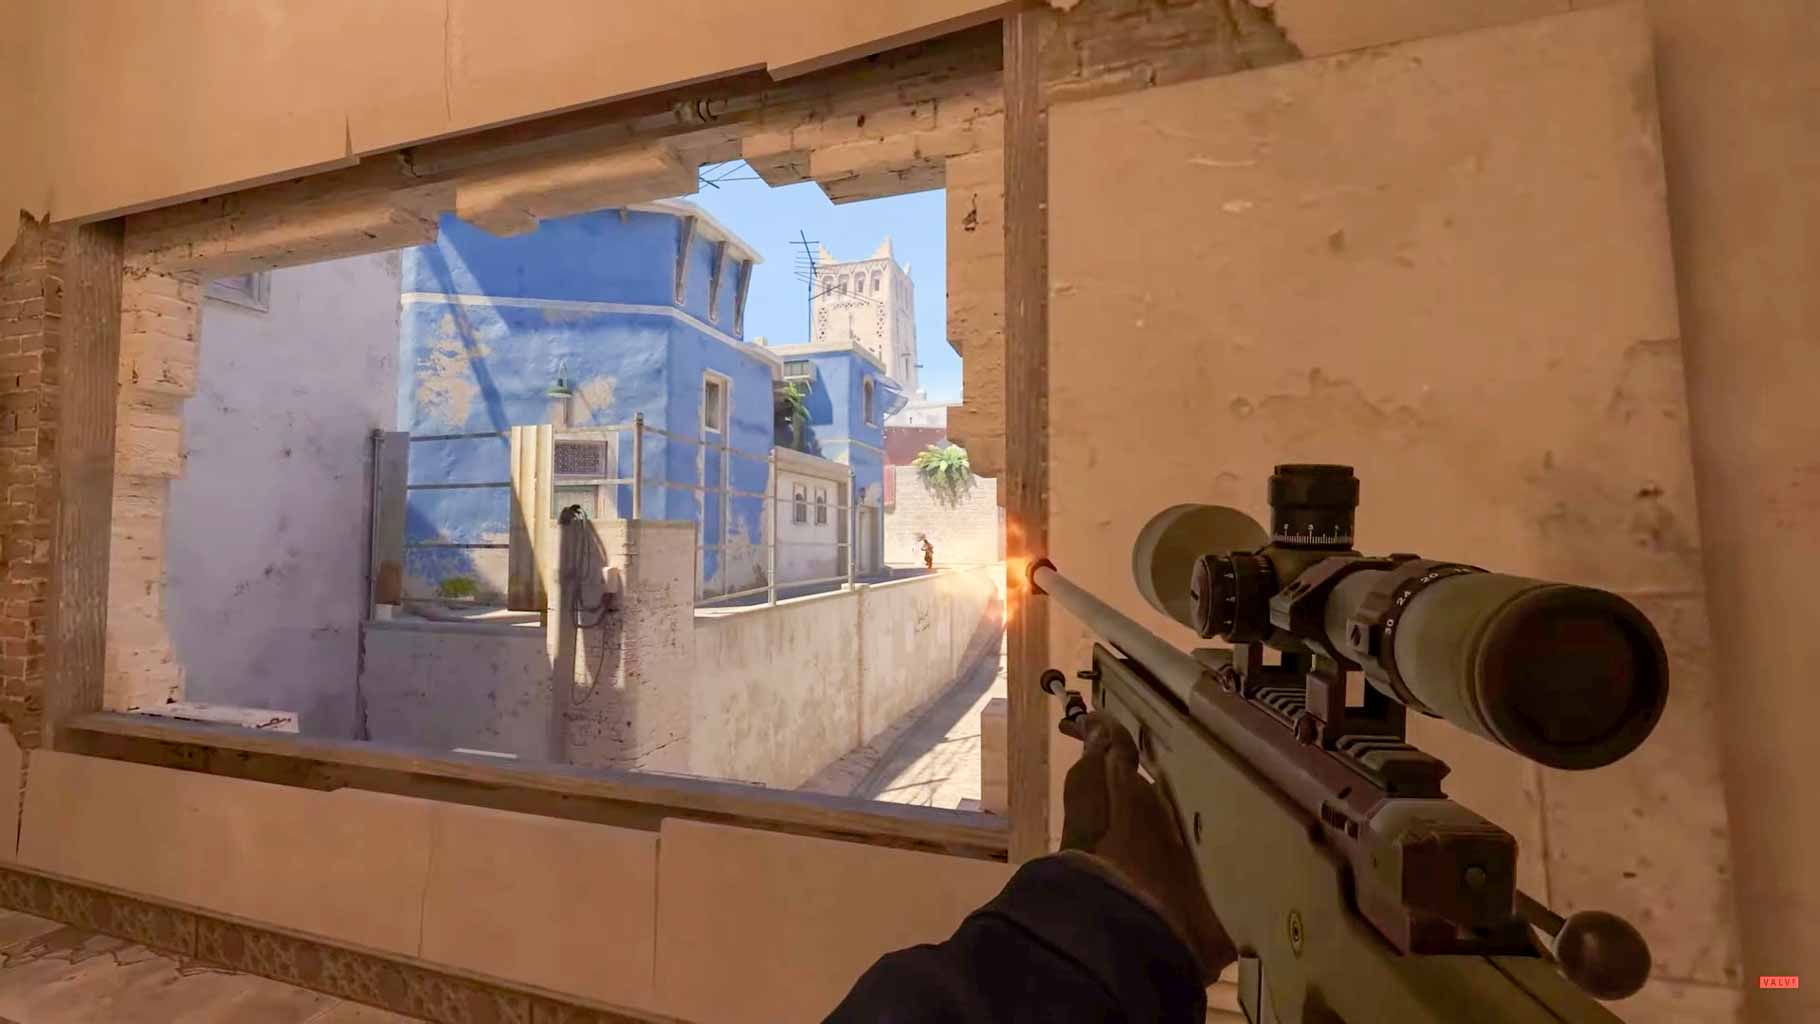 CS2 mirage, CT player shooting an awp in window, Counter strike 2